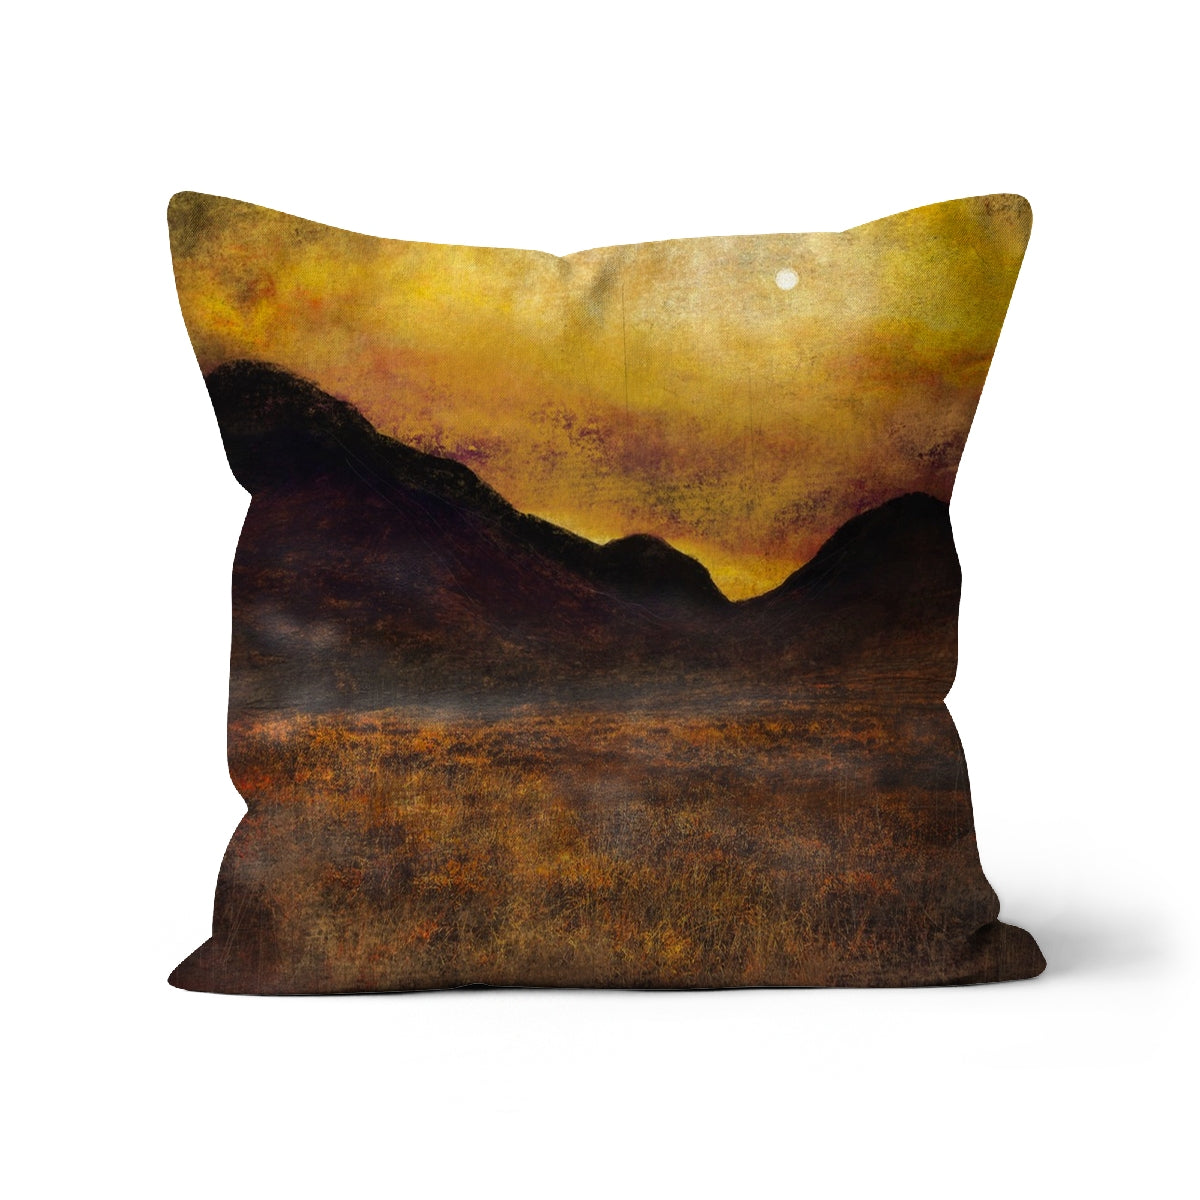 Glencoe Moonlight Art Gifts Cushion-Cushions-Glencoe Art Gallery-Canvas-24"x24"-Paintings, Prints, Homeware, Art Gifts From Scotland By Scottish Artist Kevin Hunter